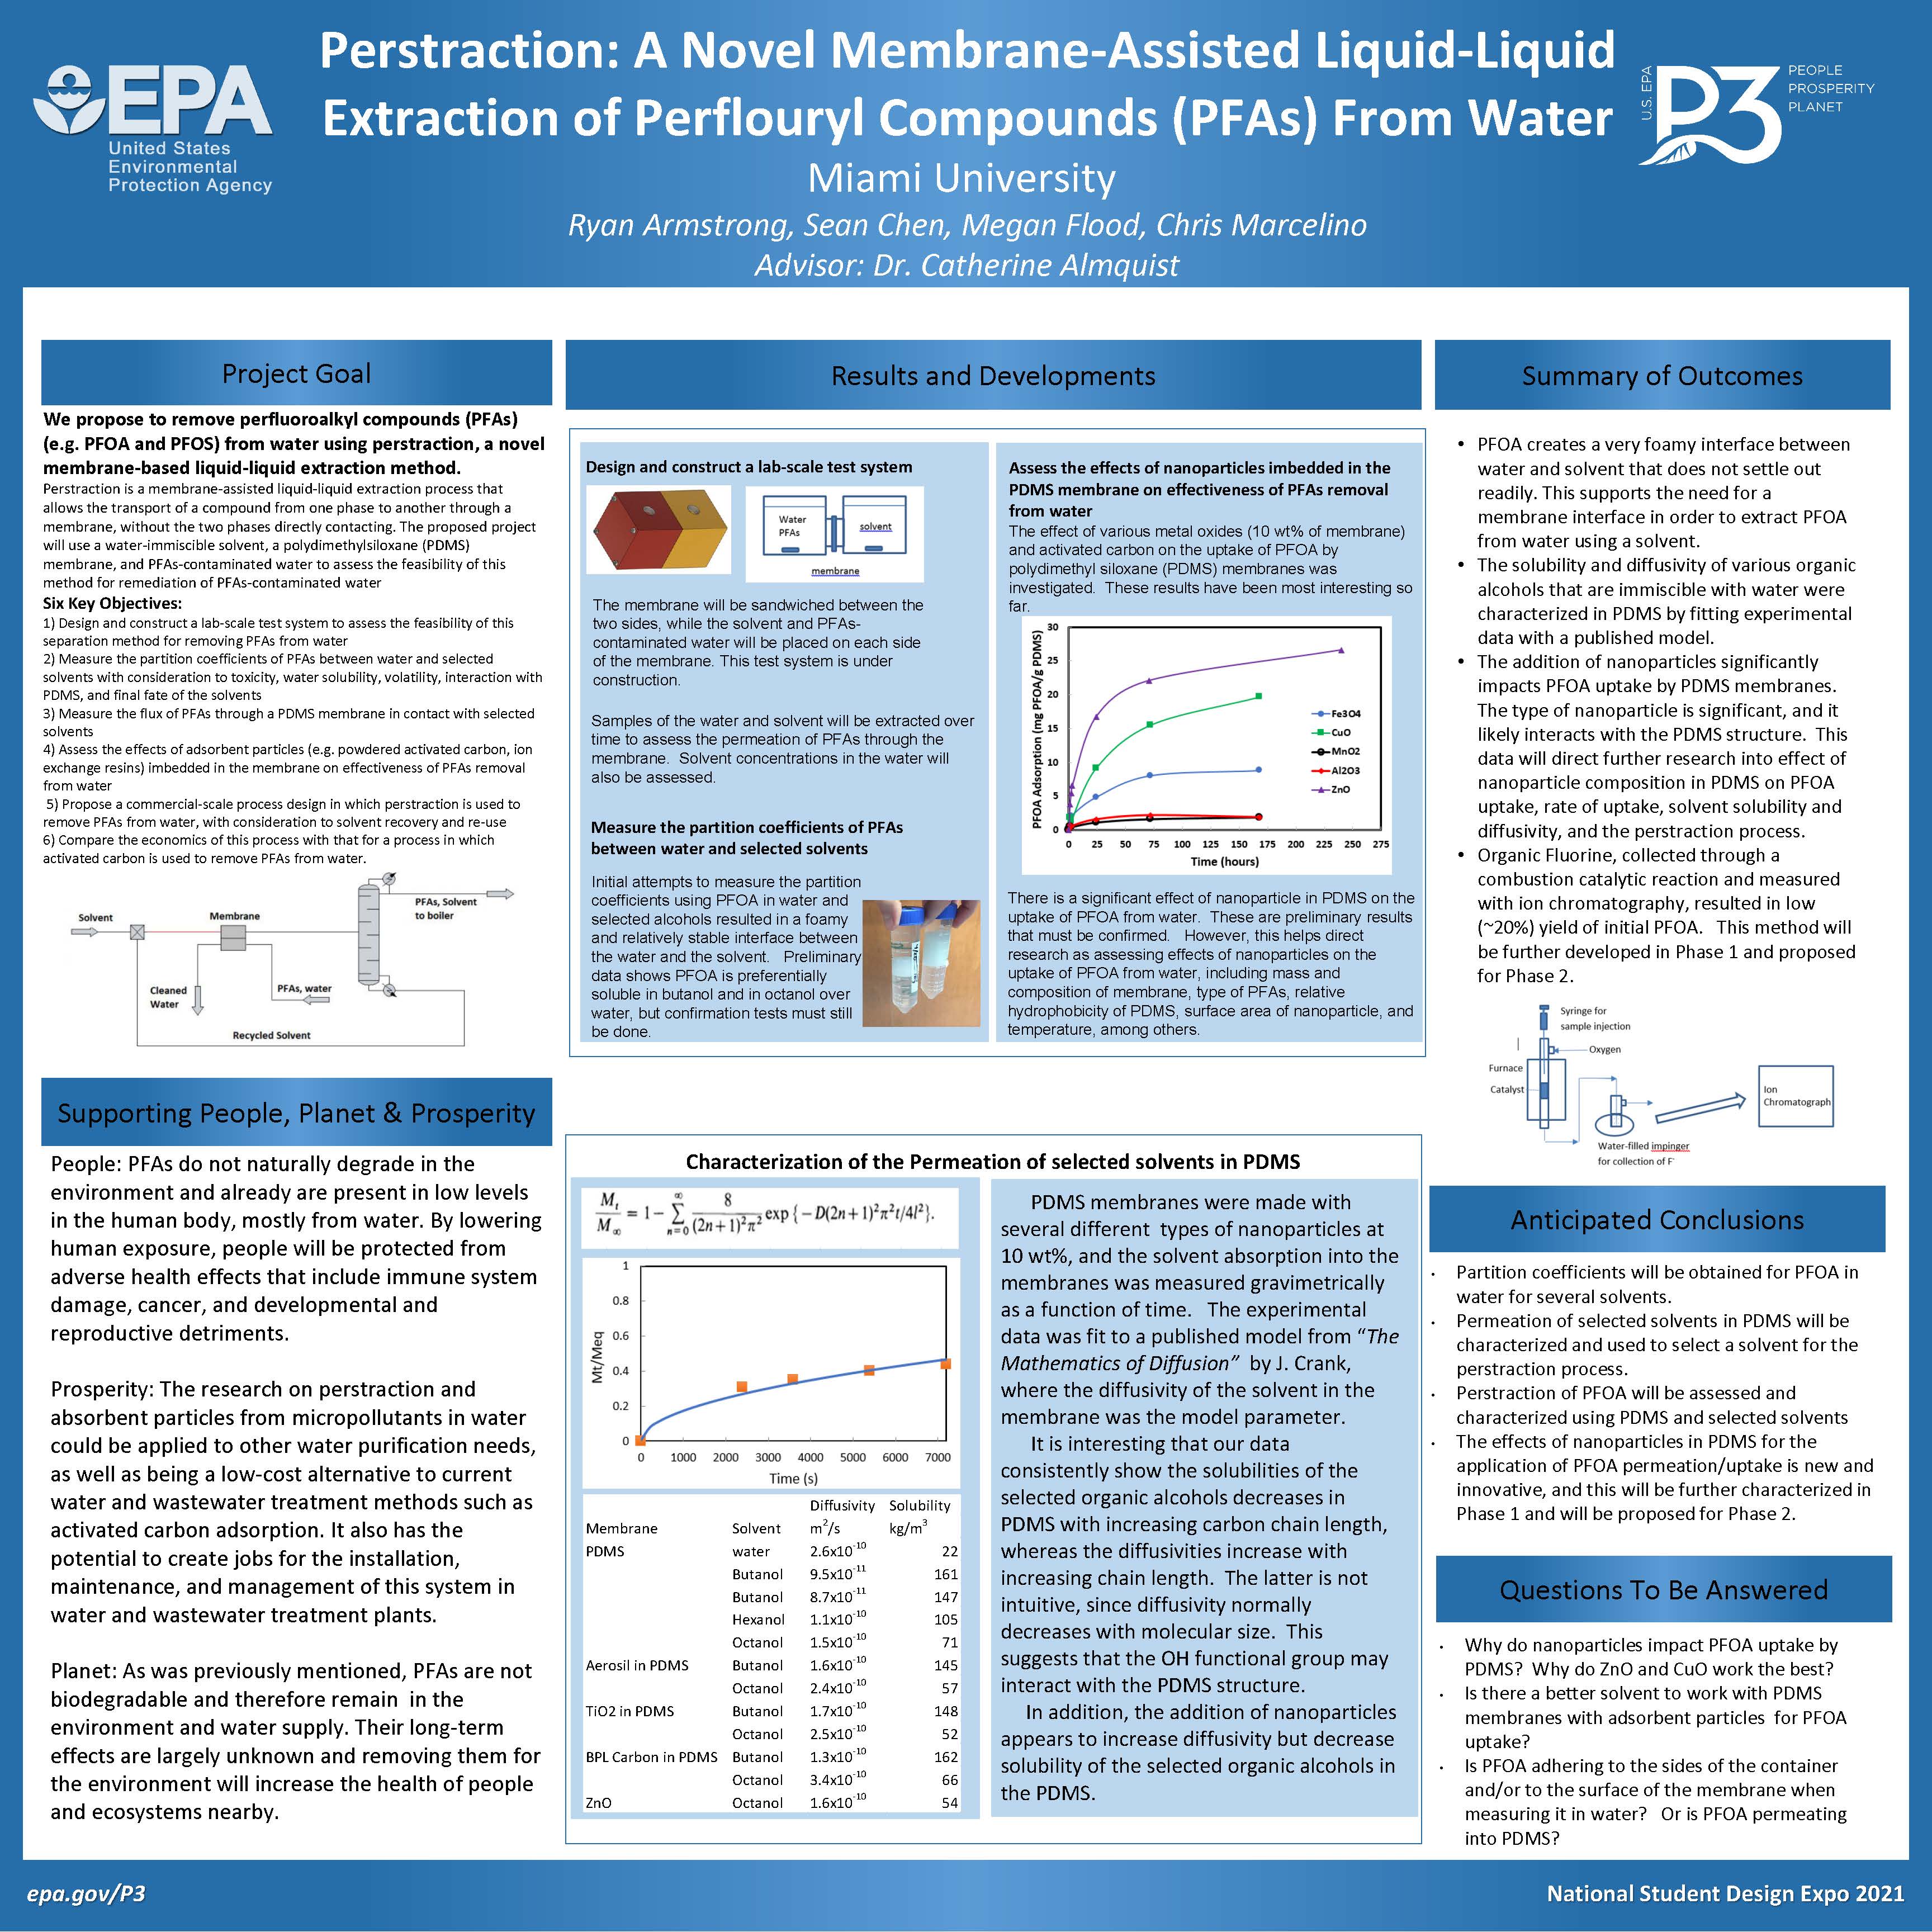 WQRF Offers Research on PFAS Removal by POU Technologies - ASPE